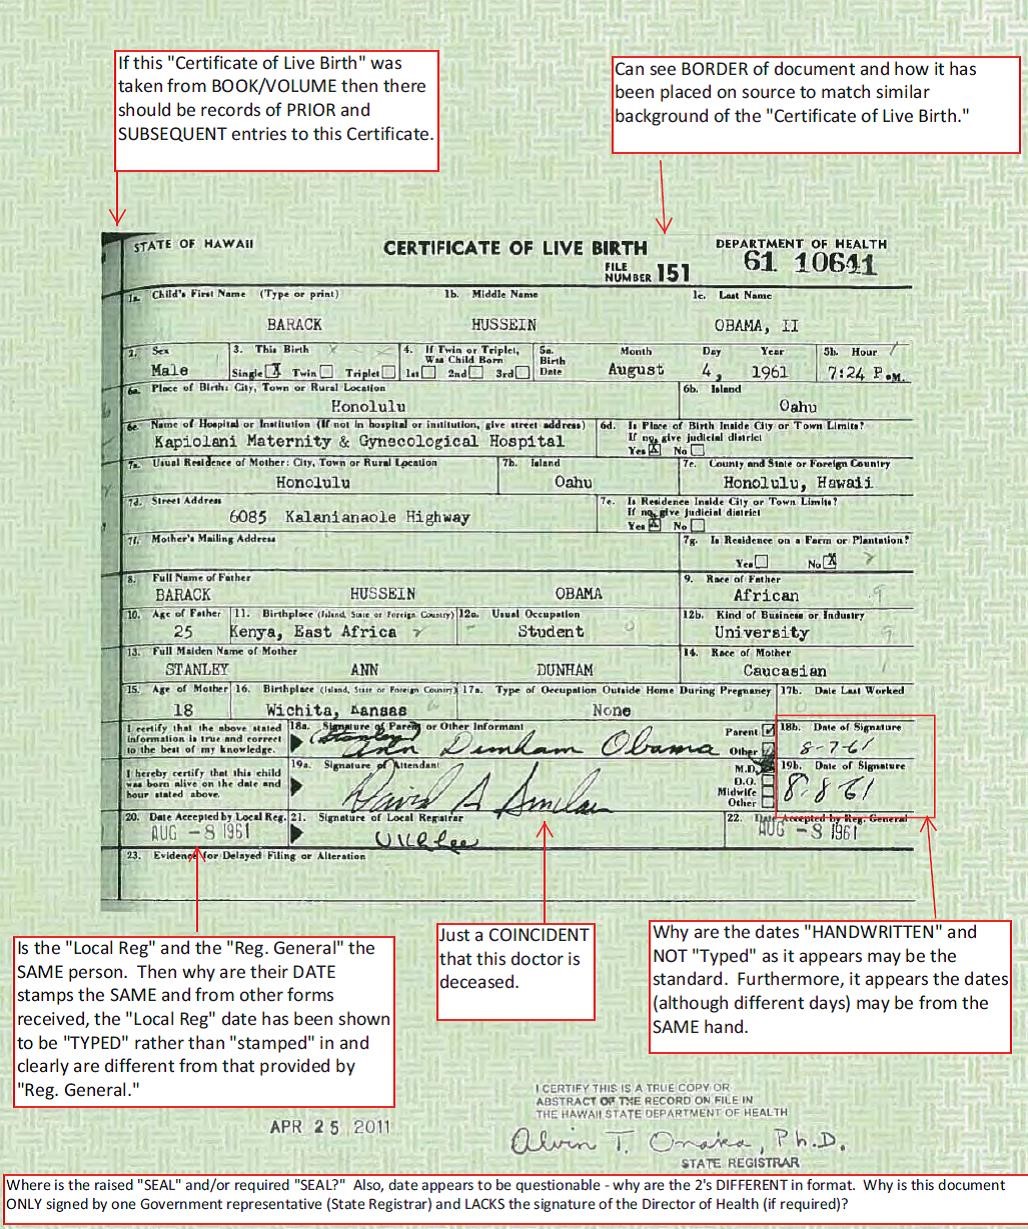 Barack Obama Certificate of Live Birth Discrepancies